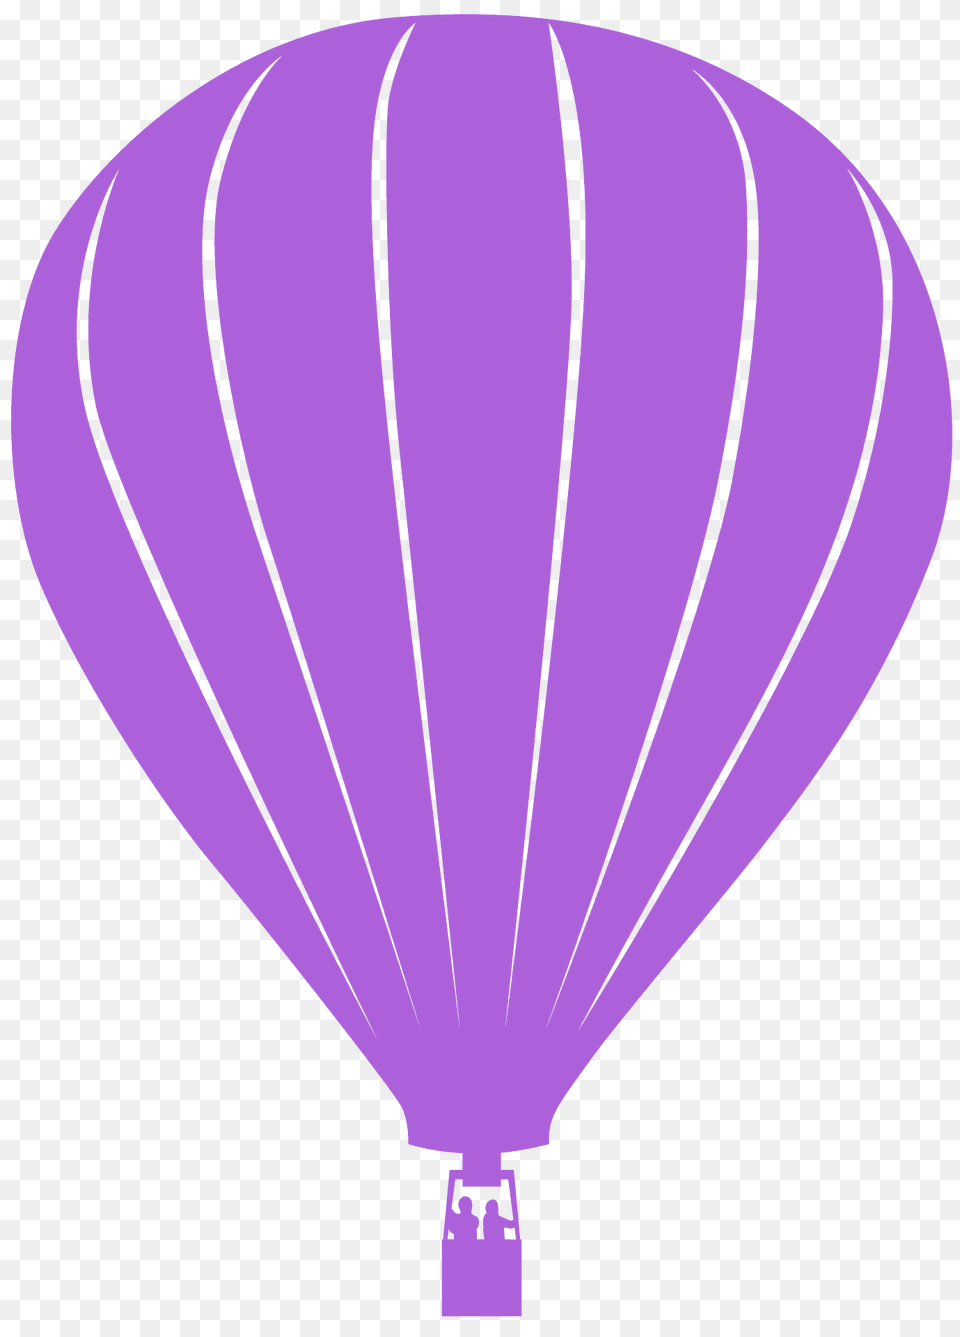 Hot Air Balloon In Flight Silhouette, Aircraft, Transportation, Vehicle, Hot Air Balloon Free Transparent Png